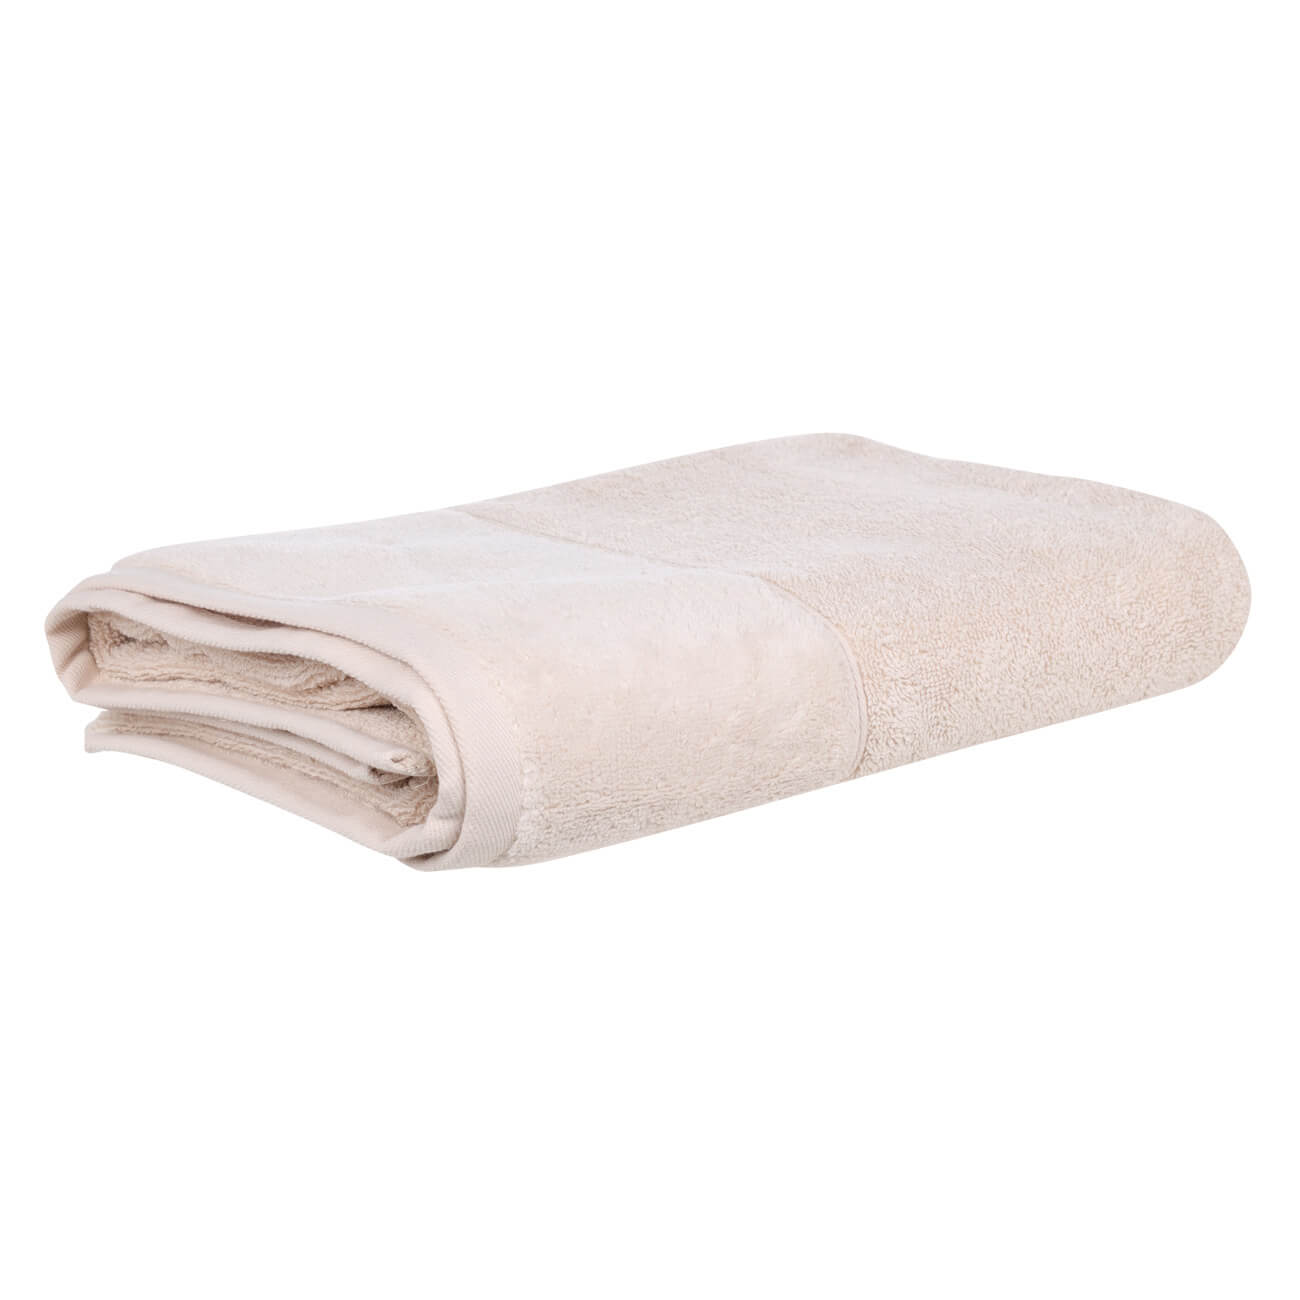 Полотенце, 70х140 см, хлопок, бежевое, Velvet touch полотенце для животных супервпитывающее 43 х 35 см розовое